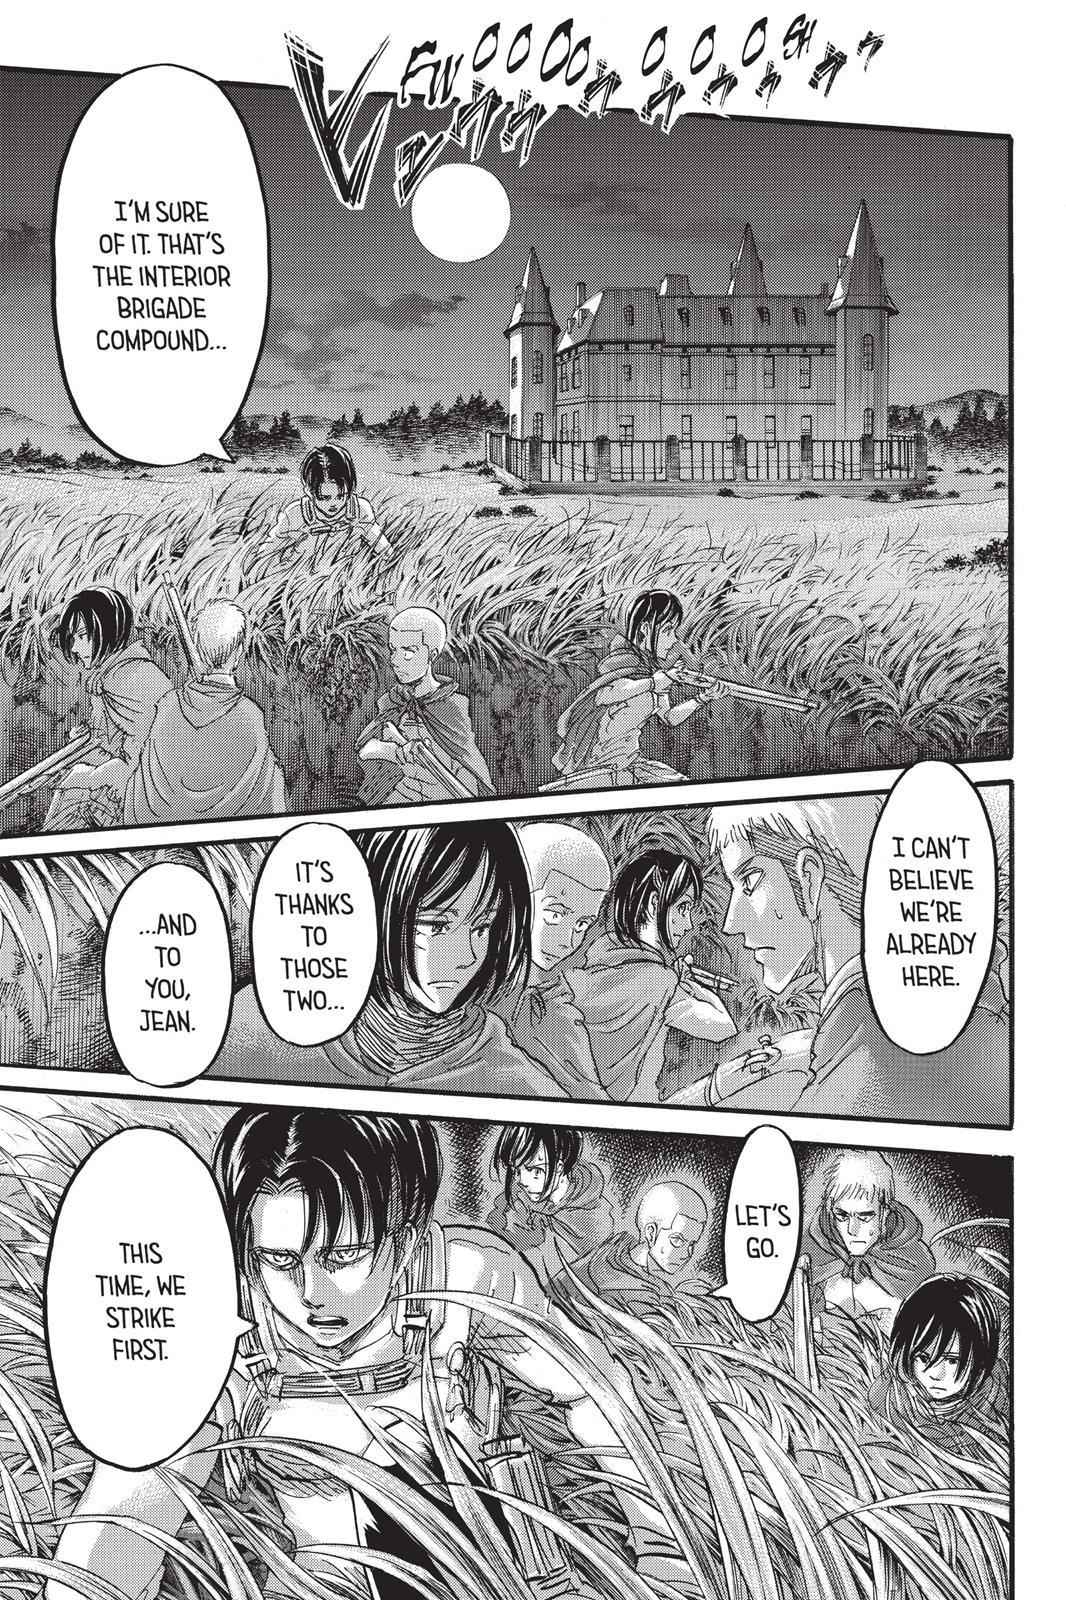 Shingeki no Kyojin Chapter 59 - Attack On Titan Manga Online